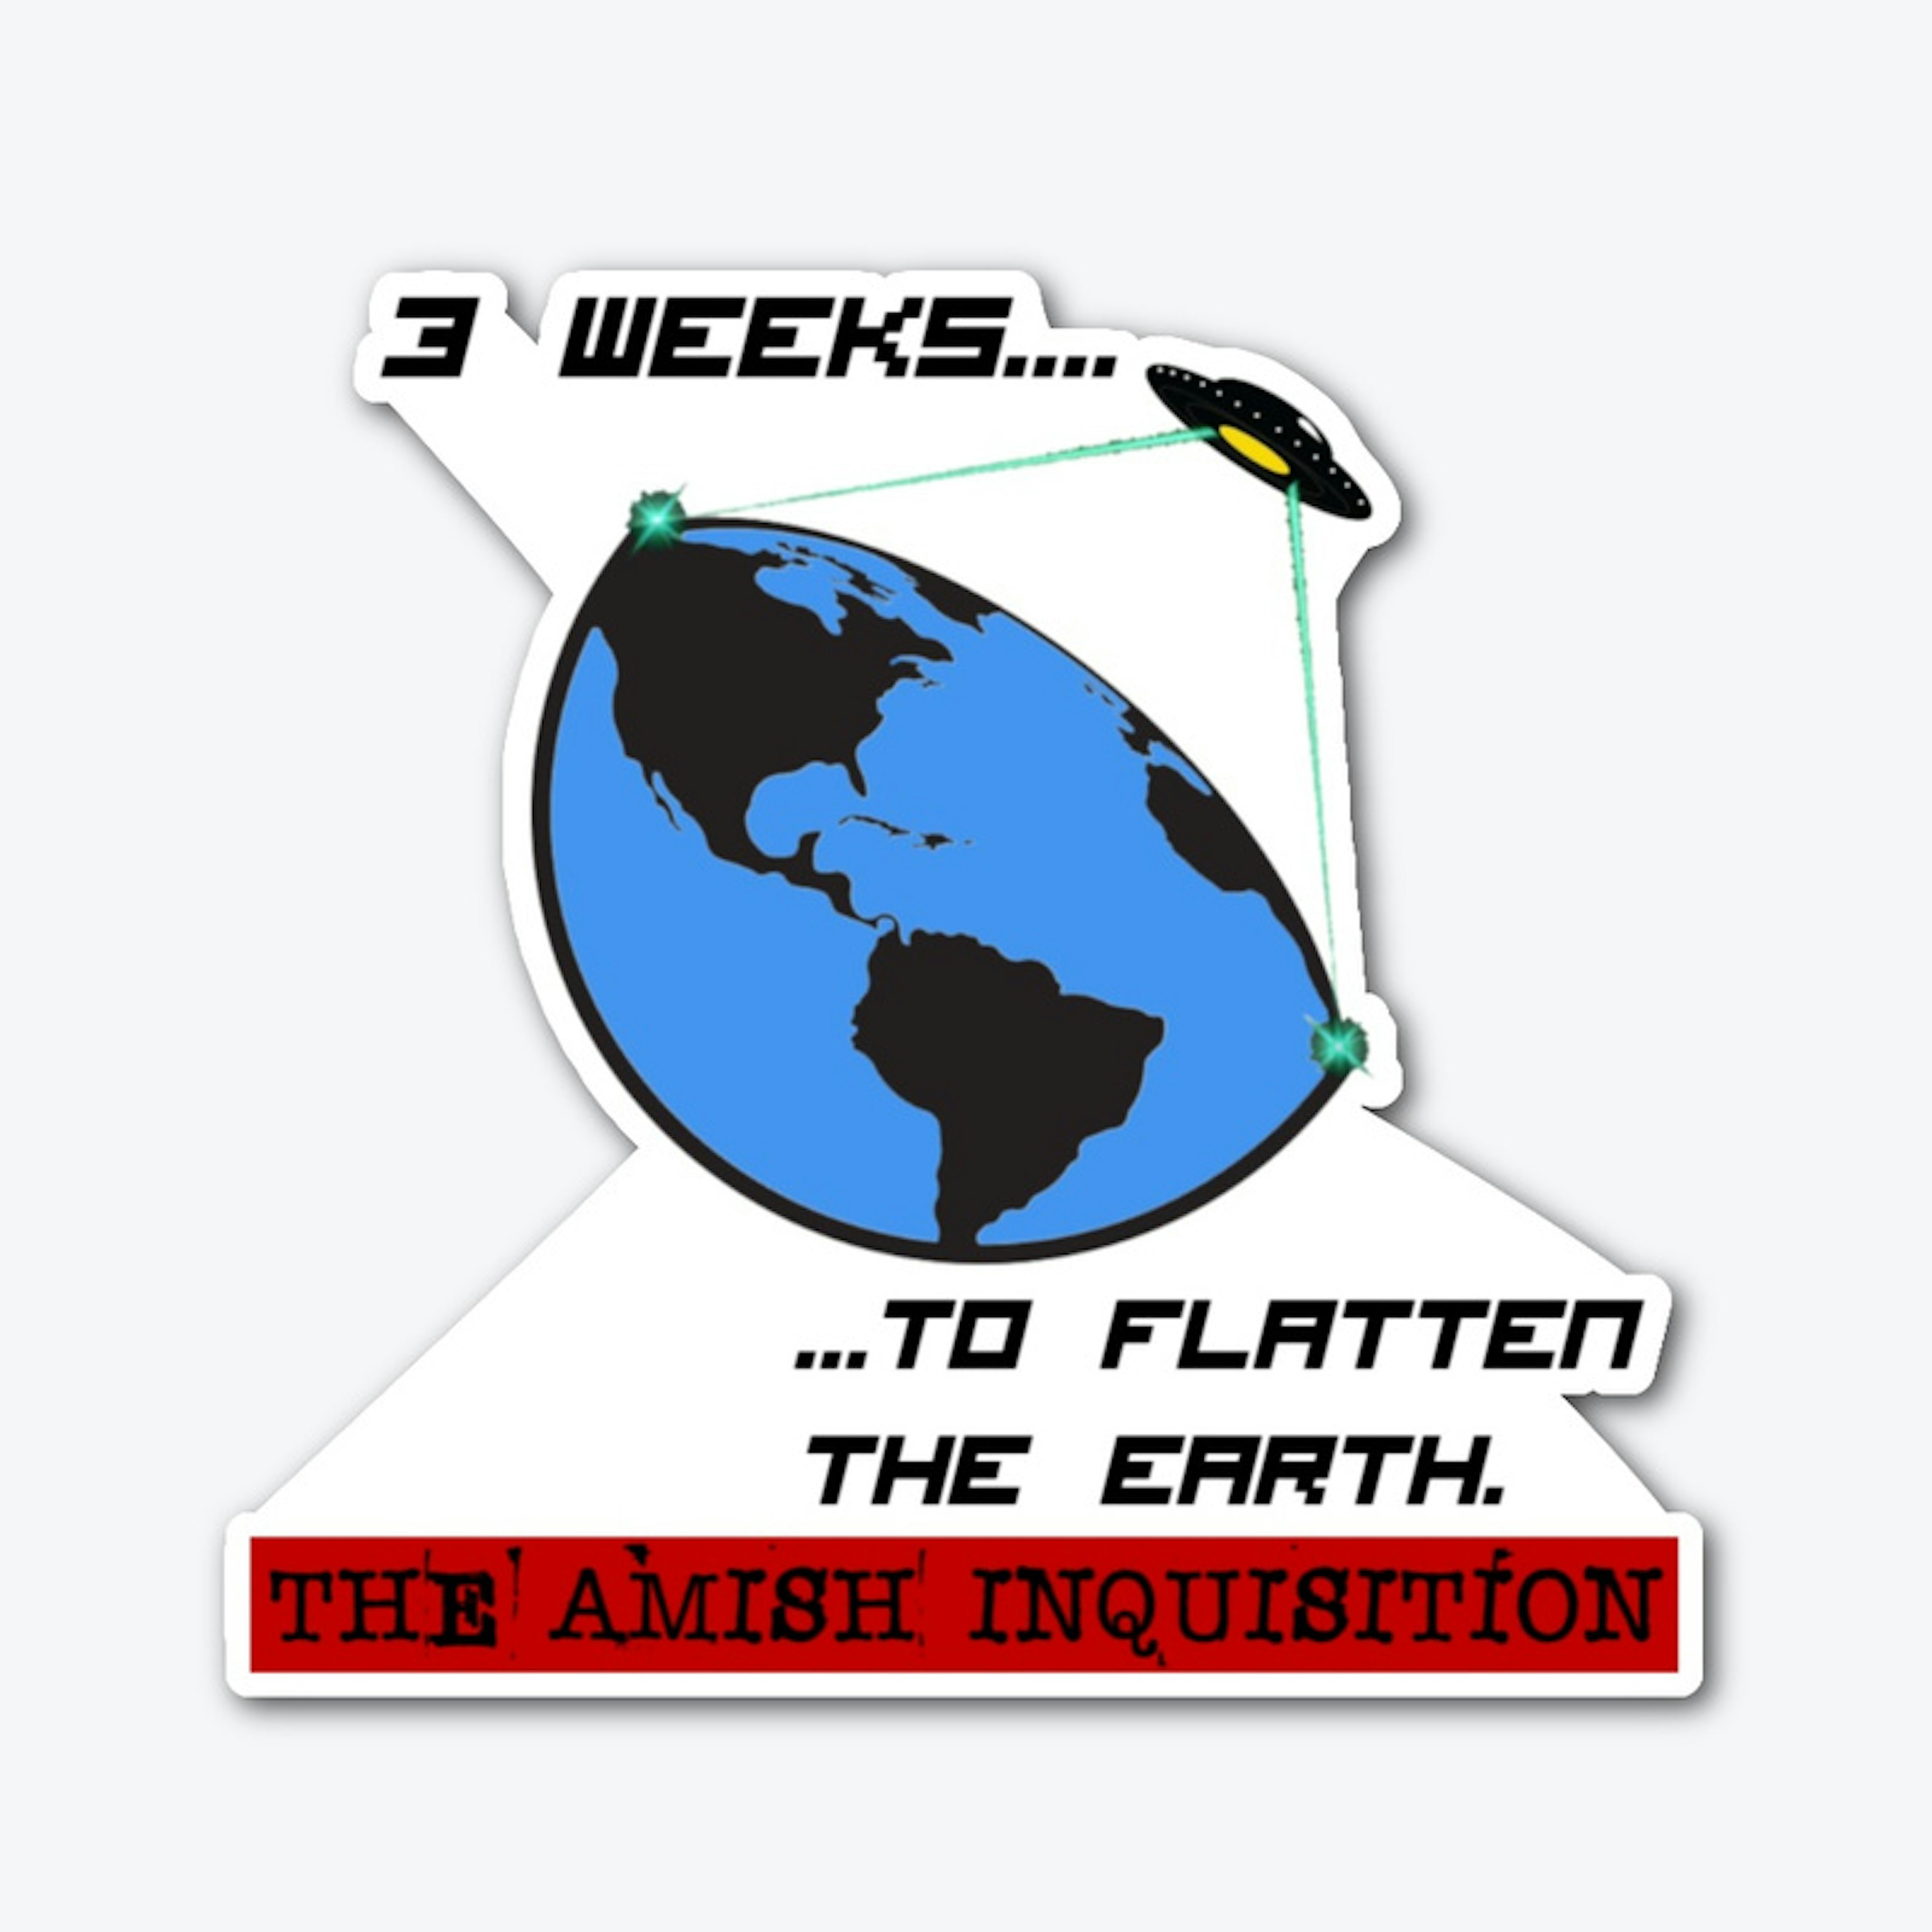 3 weeks...to flatten the earth.